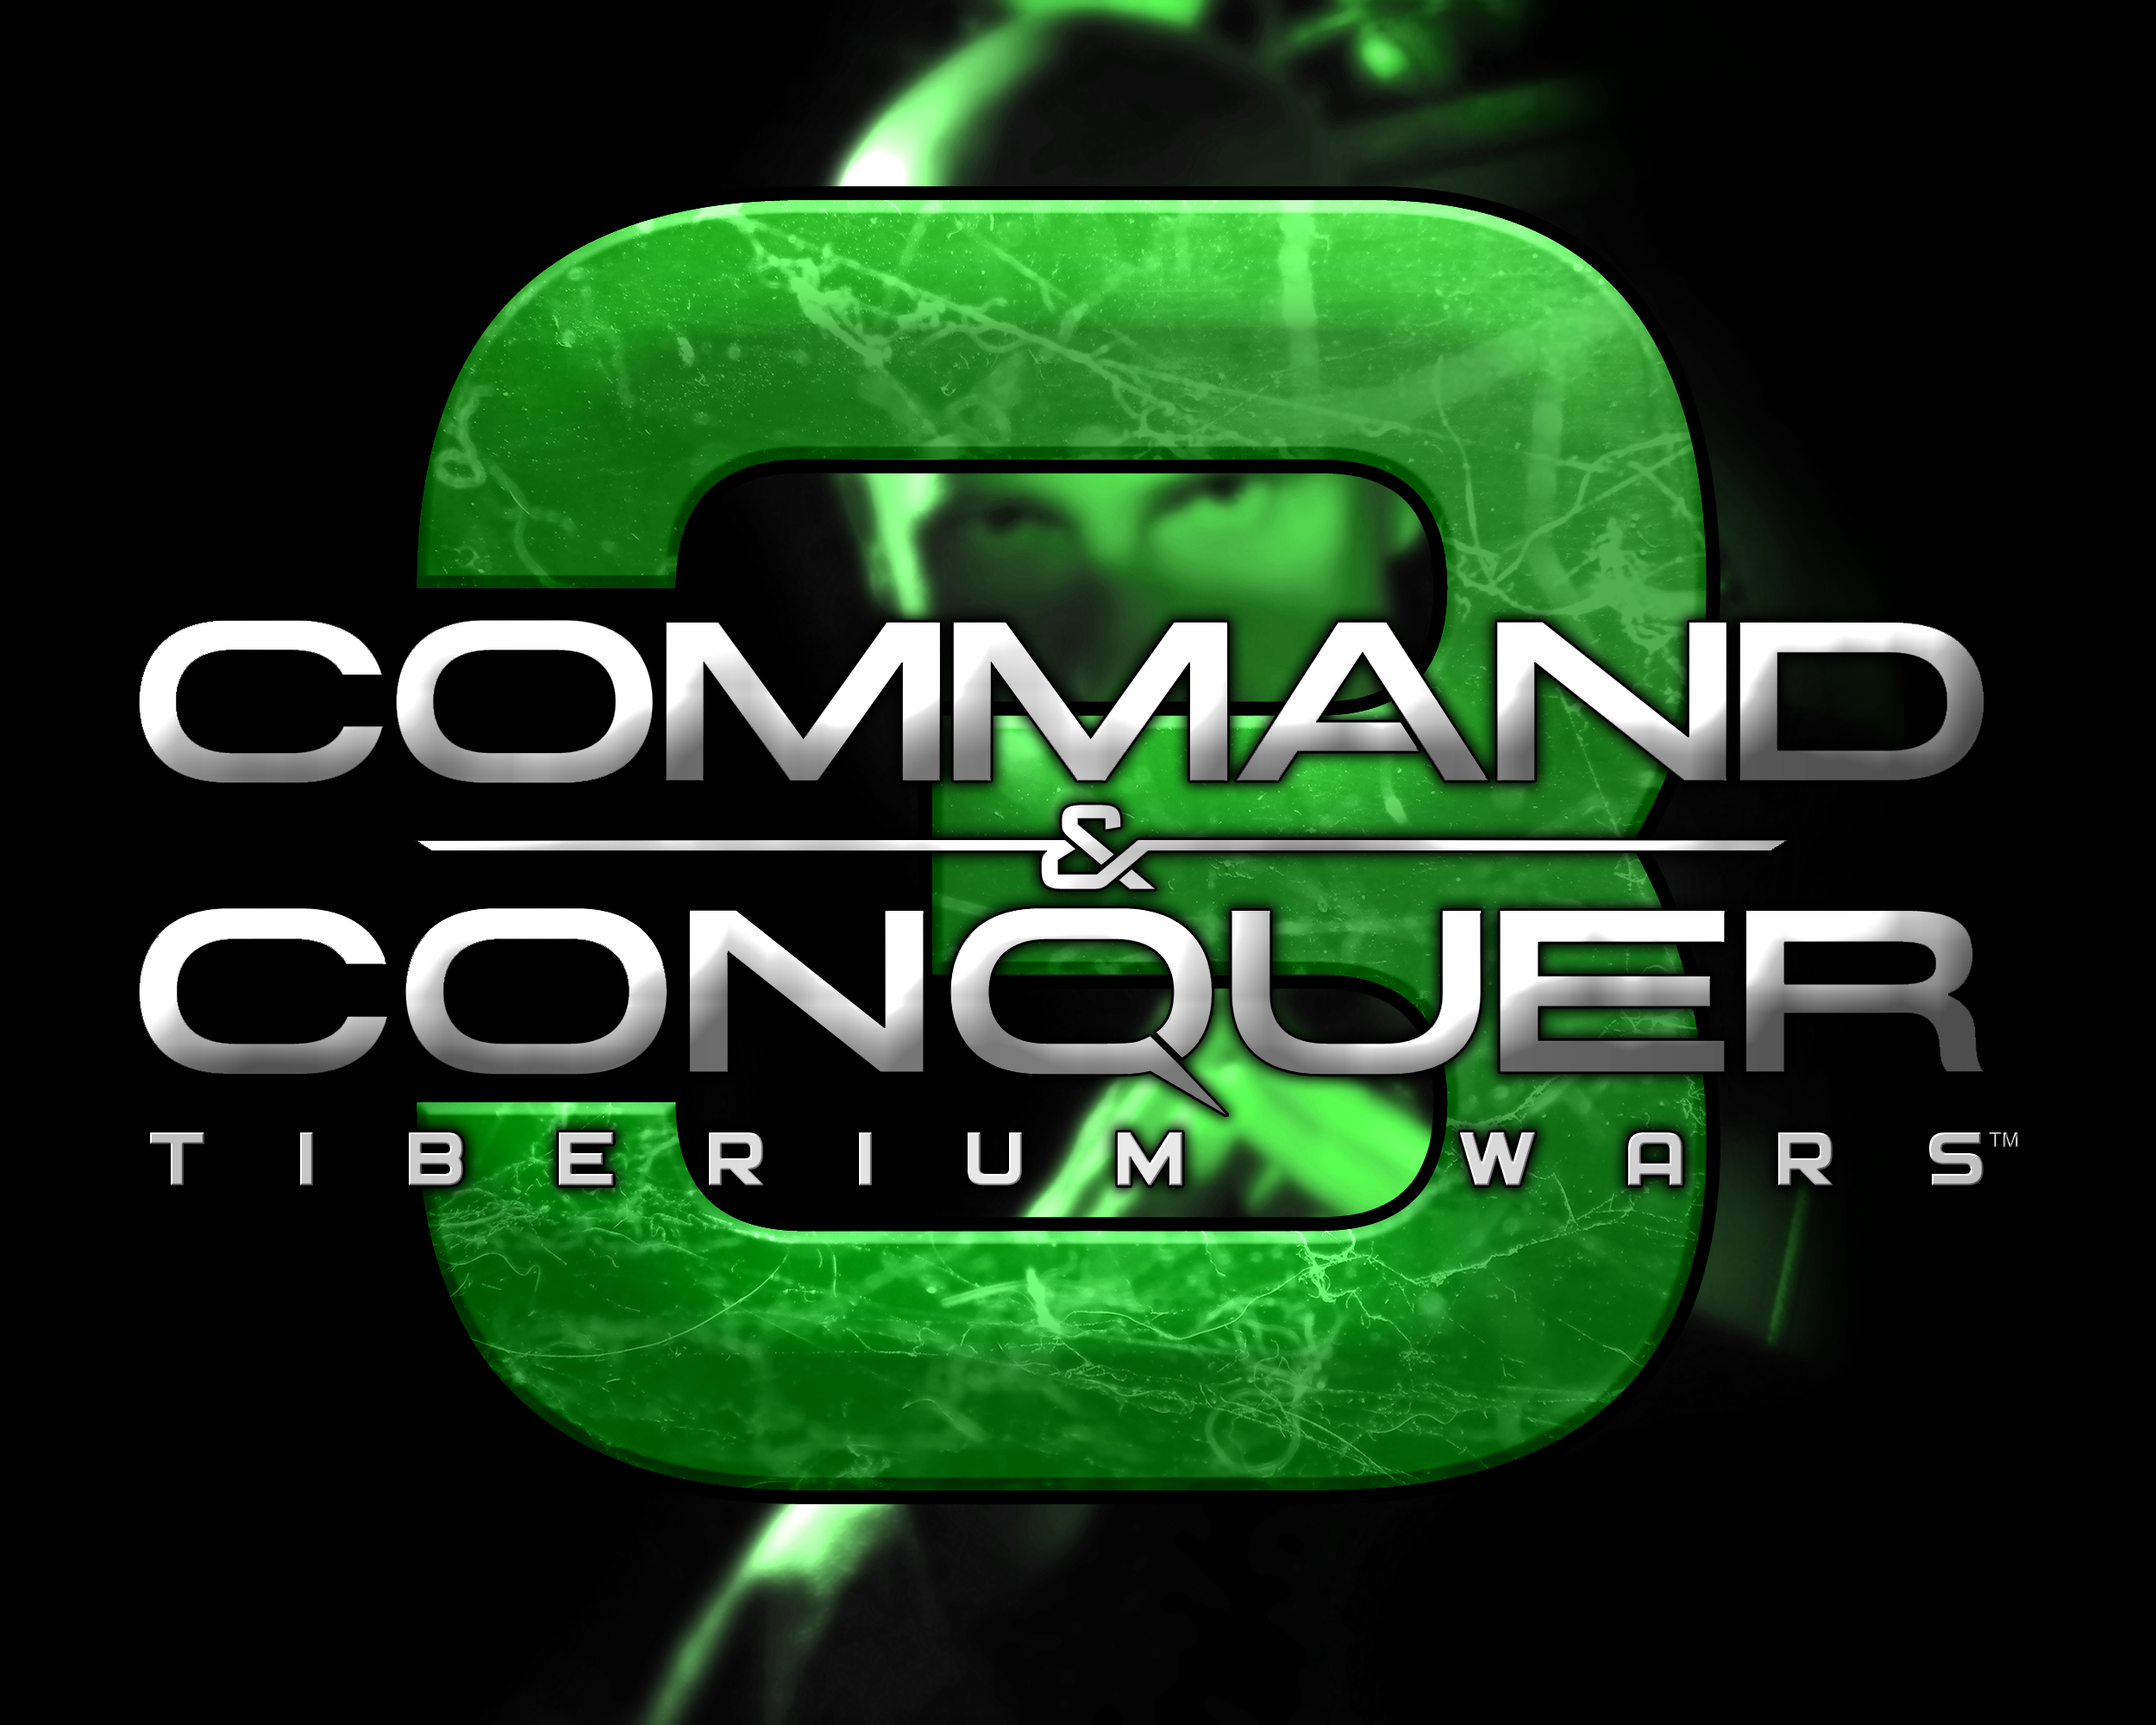 Command And Conquer 3 Tiberium Wars | НОД | Пляска смерти